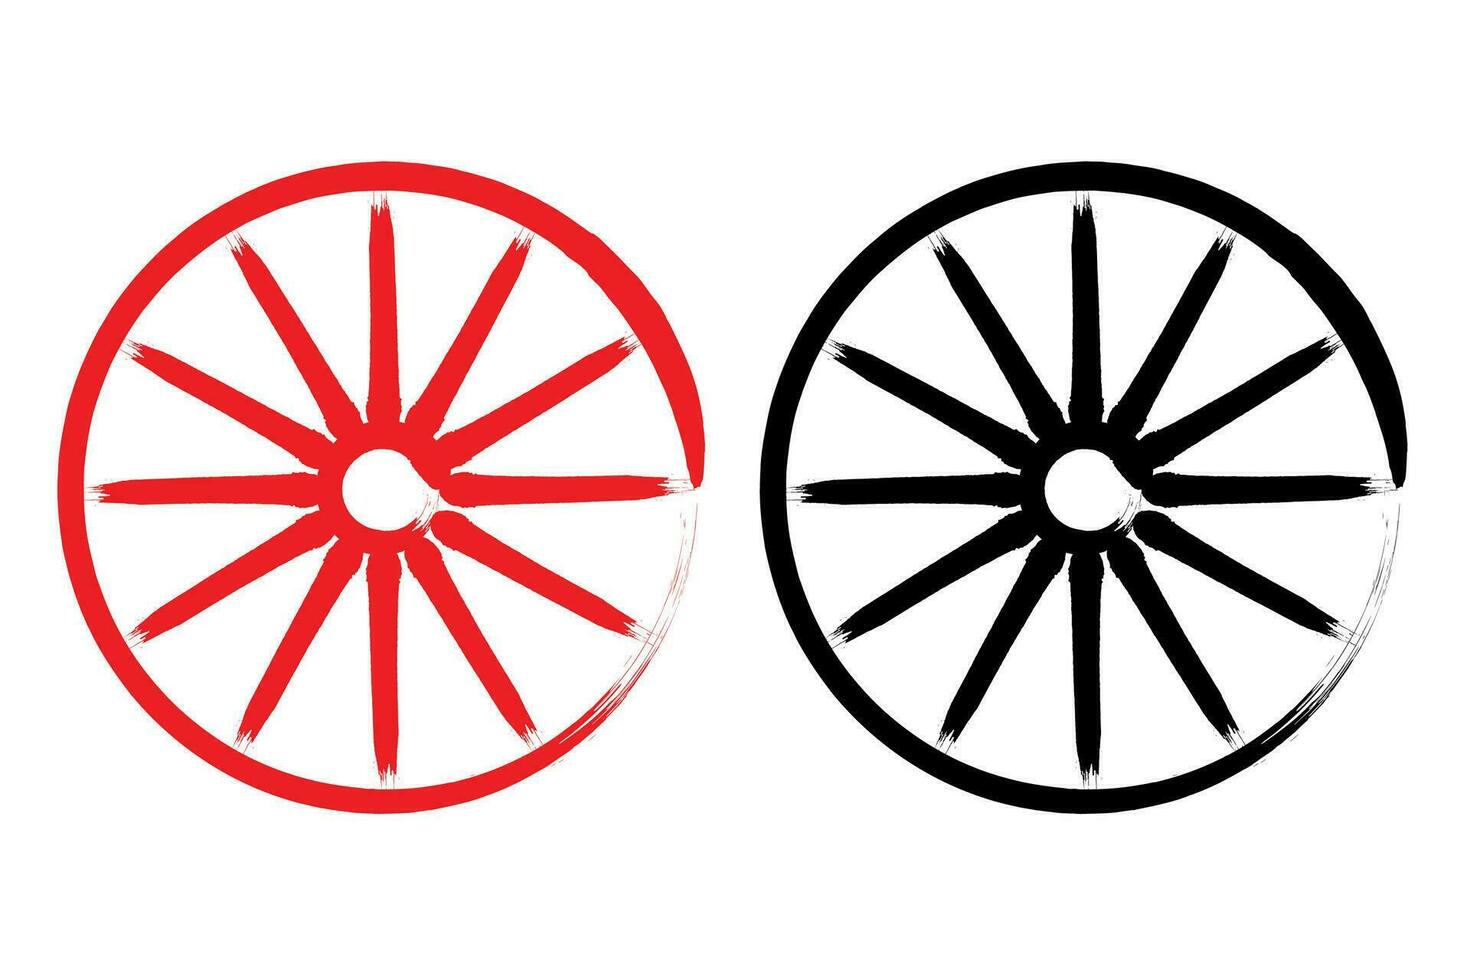 Grunge stroke circle Wagon wooden wheel icon, wheel vector icon.